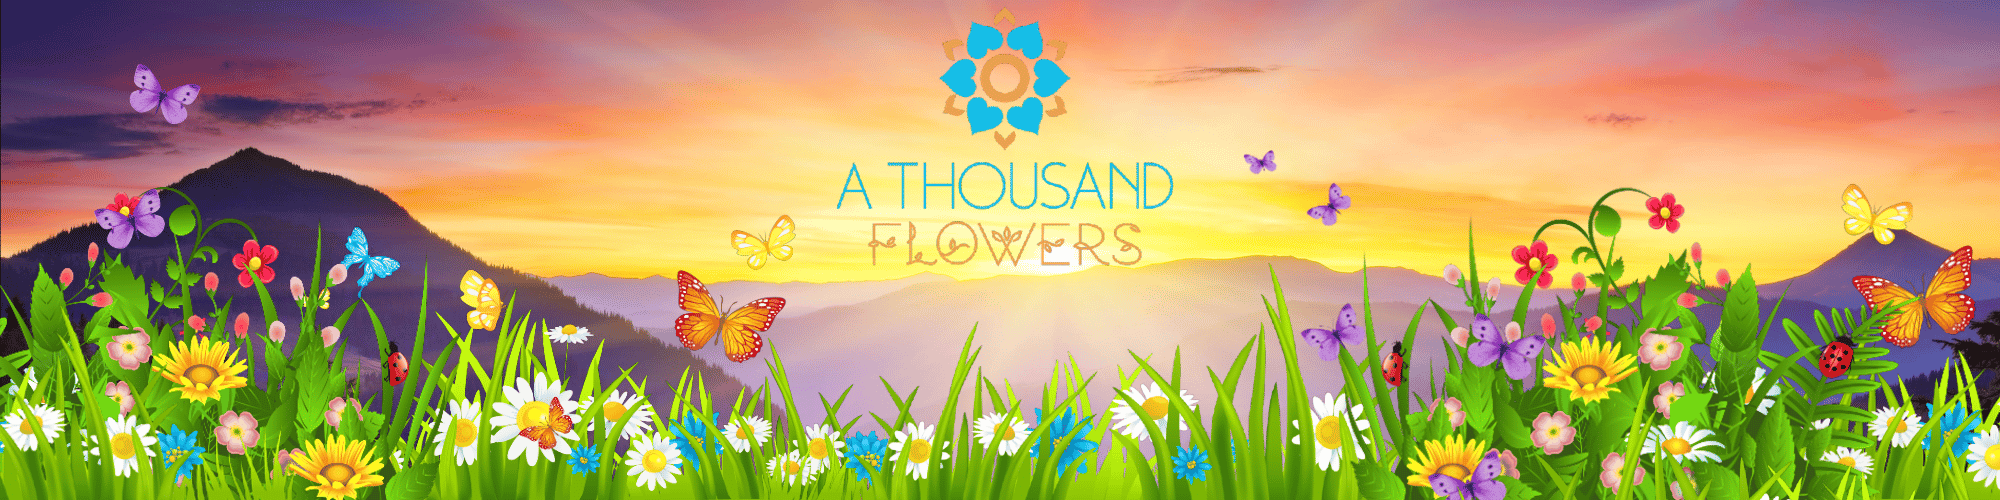 A Thousand Flowers Homepage